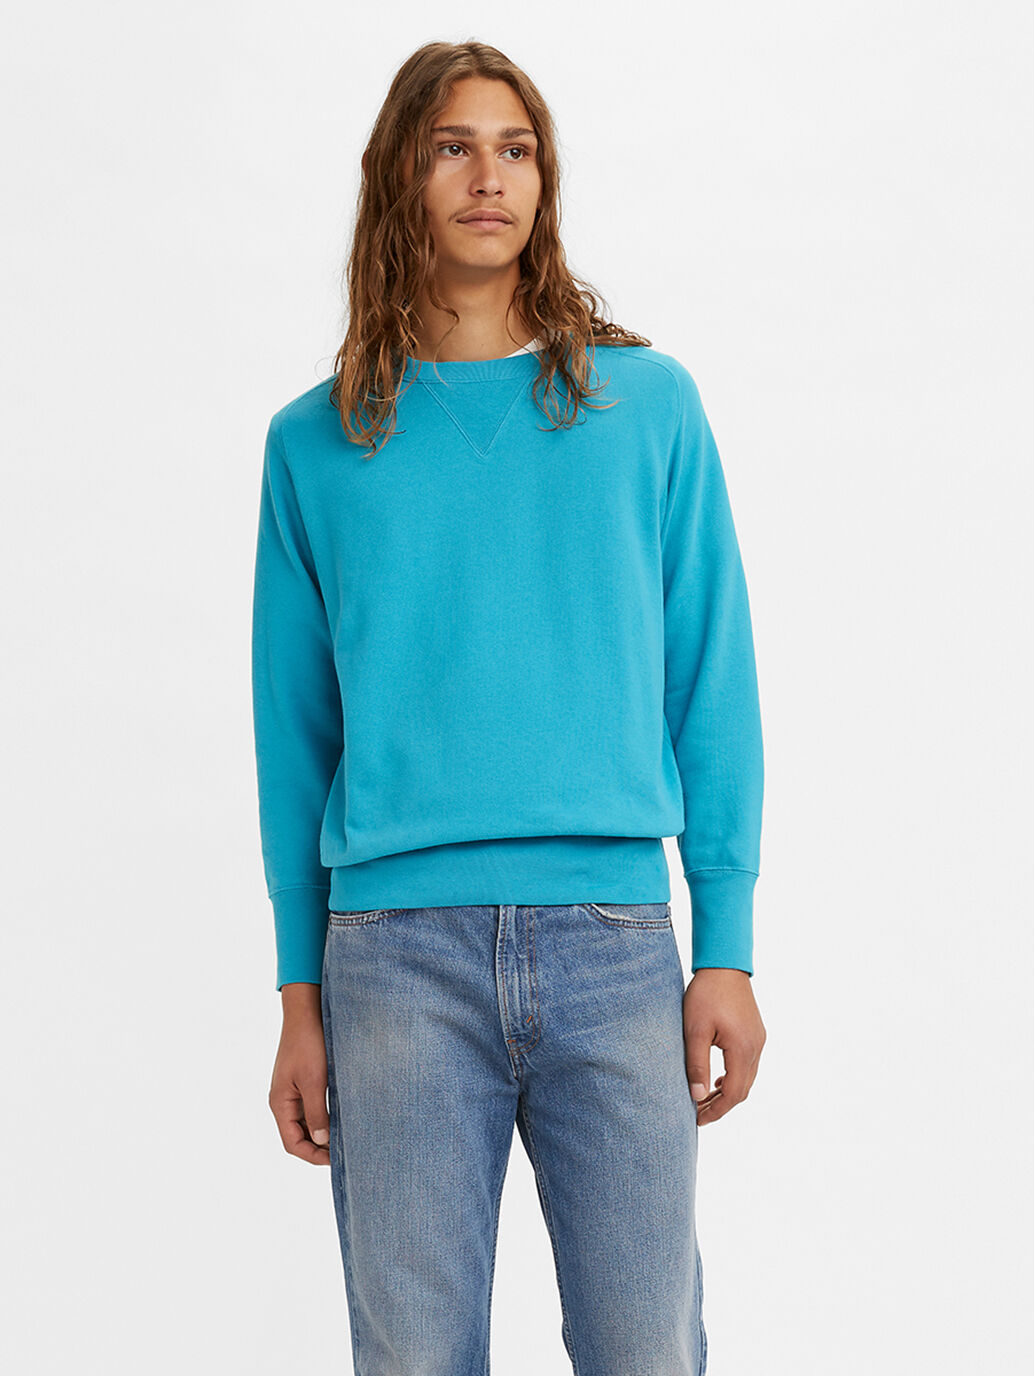 bay meadows sweatshirt